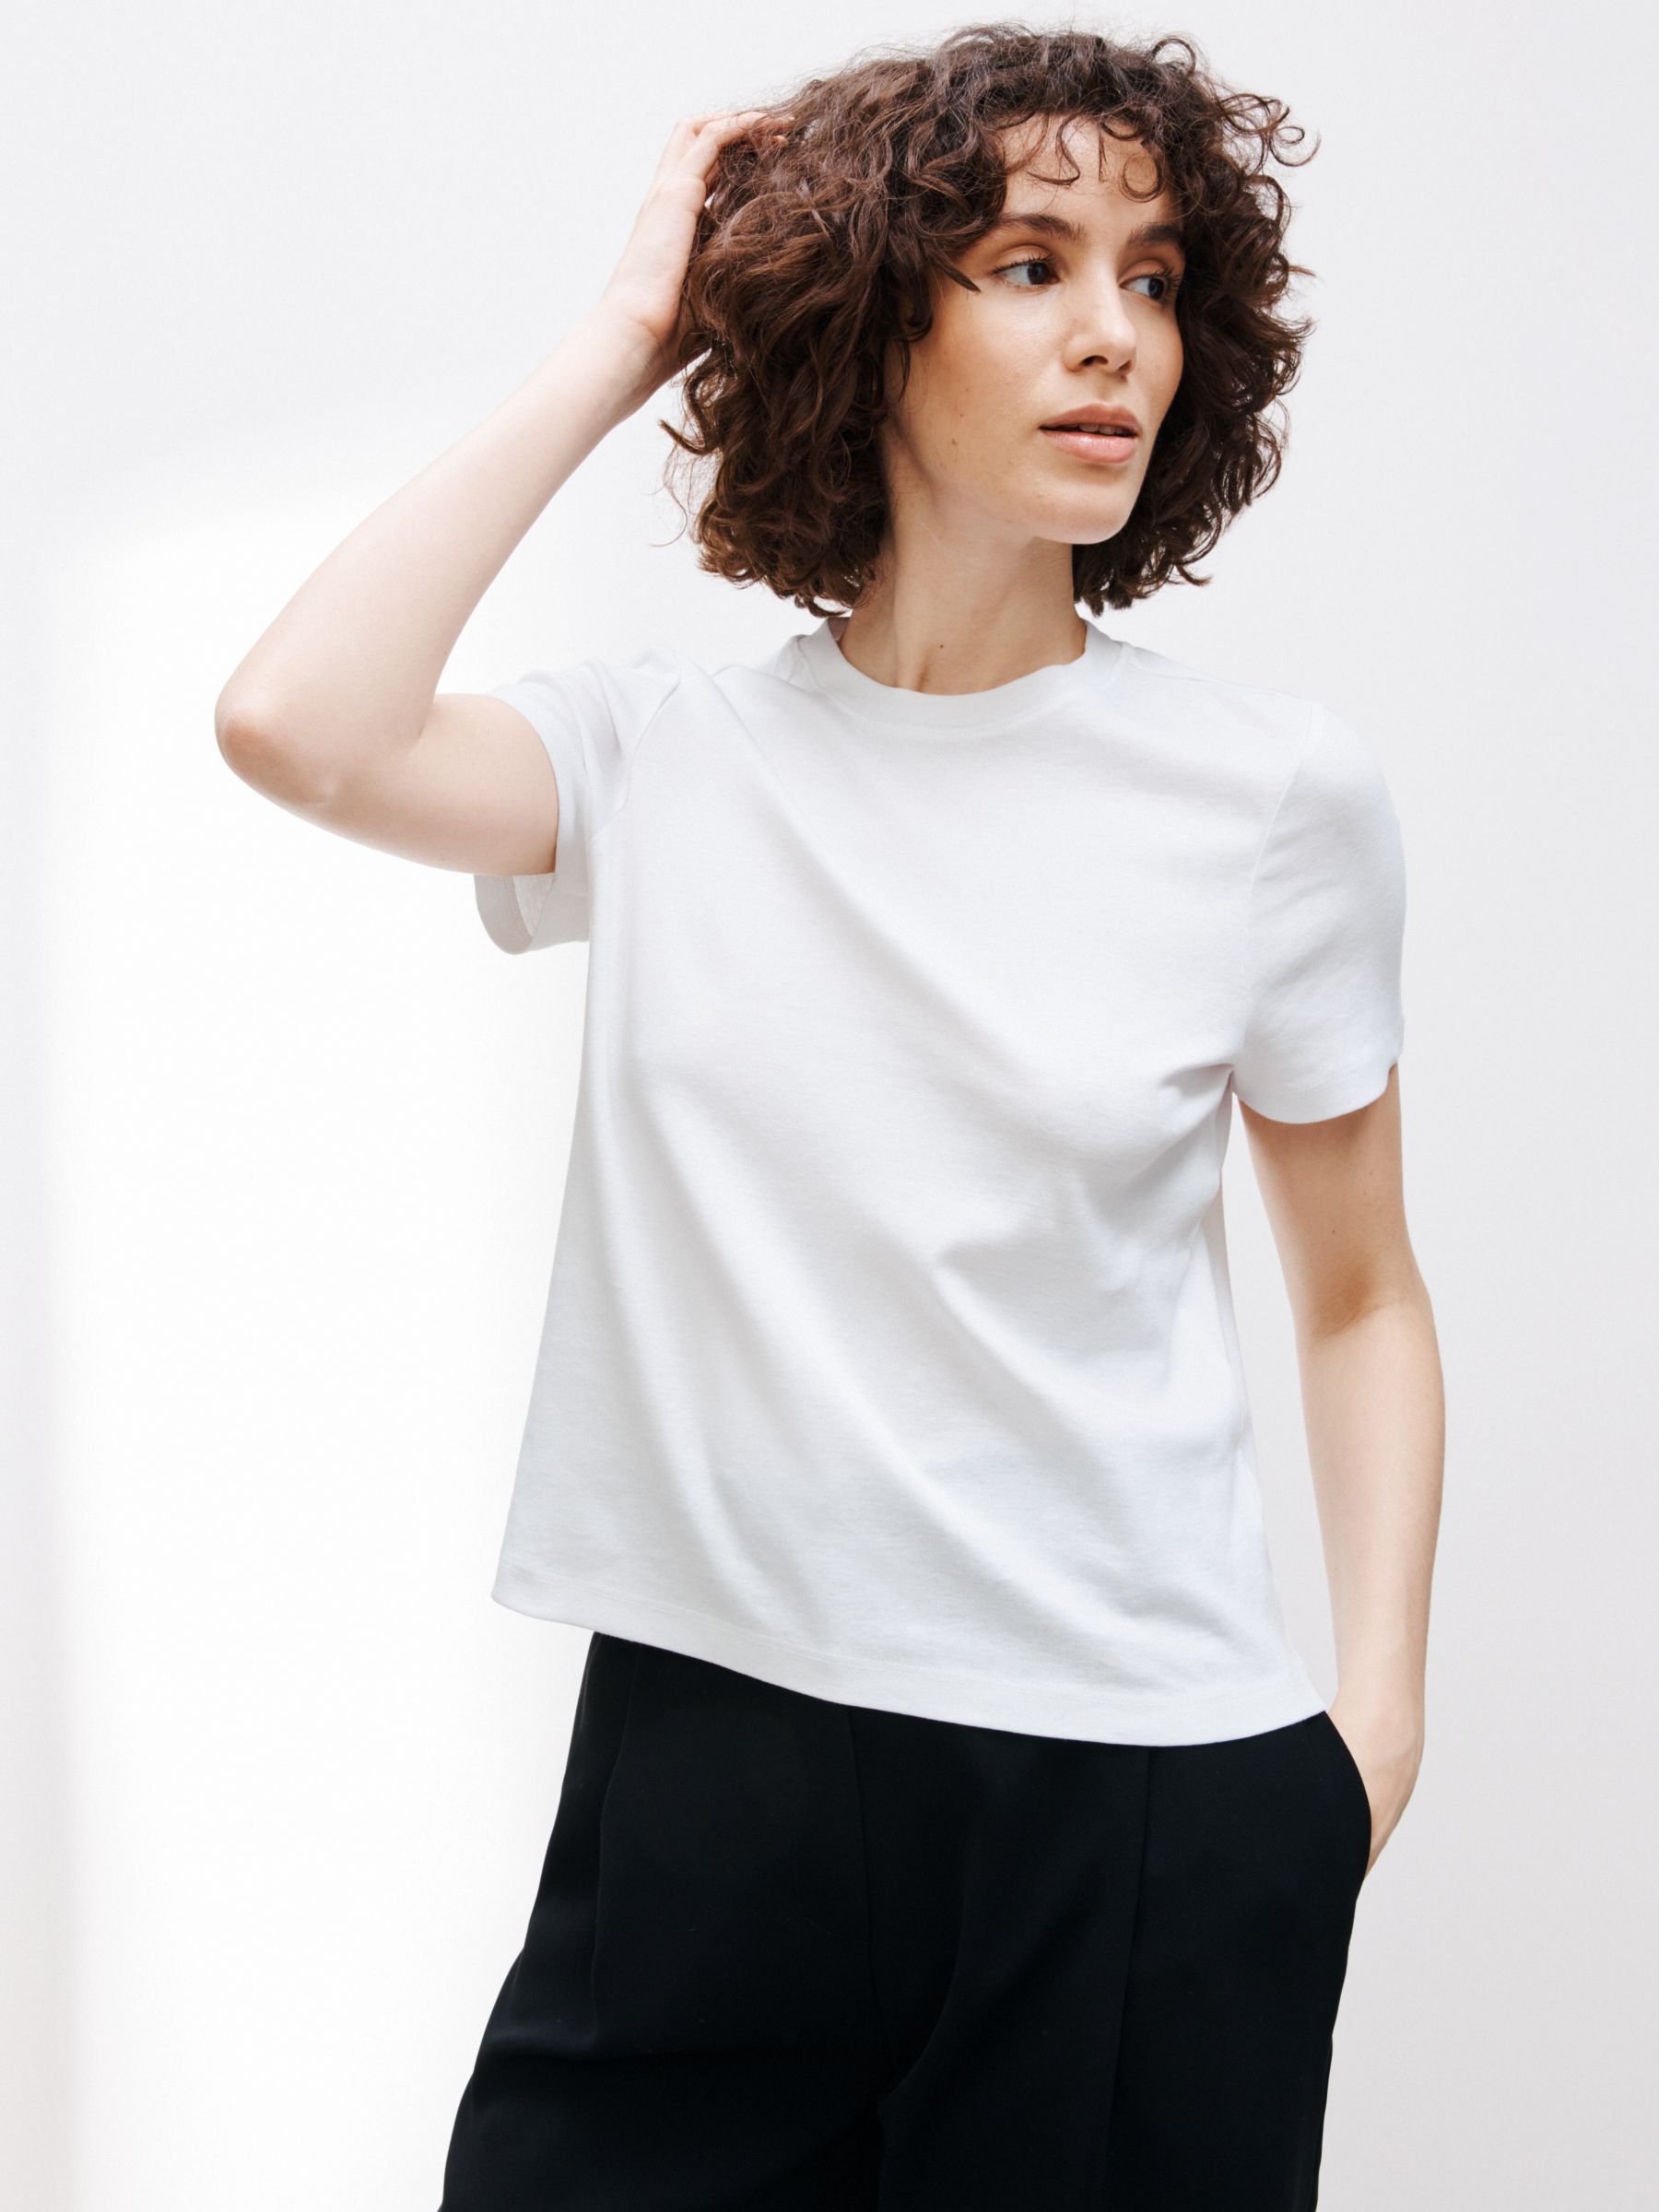 Women's White T-Shirts | John Lewis u0026 Partners